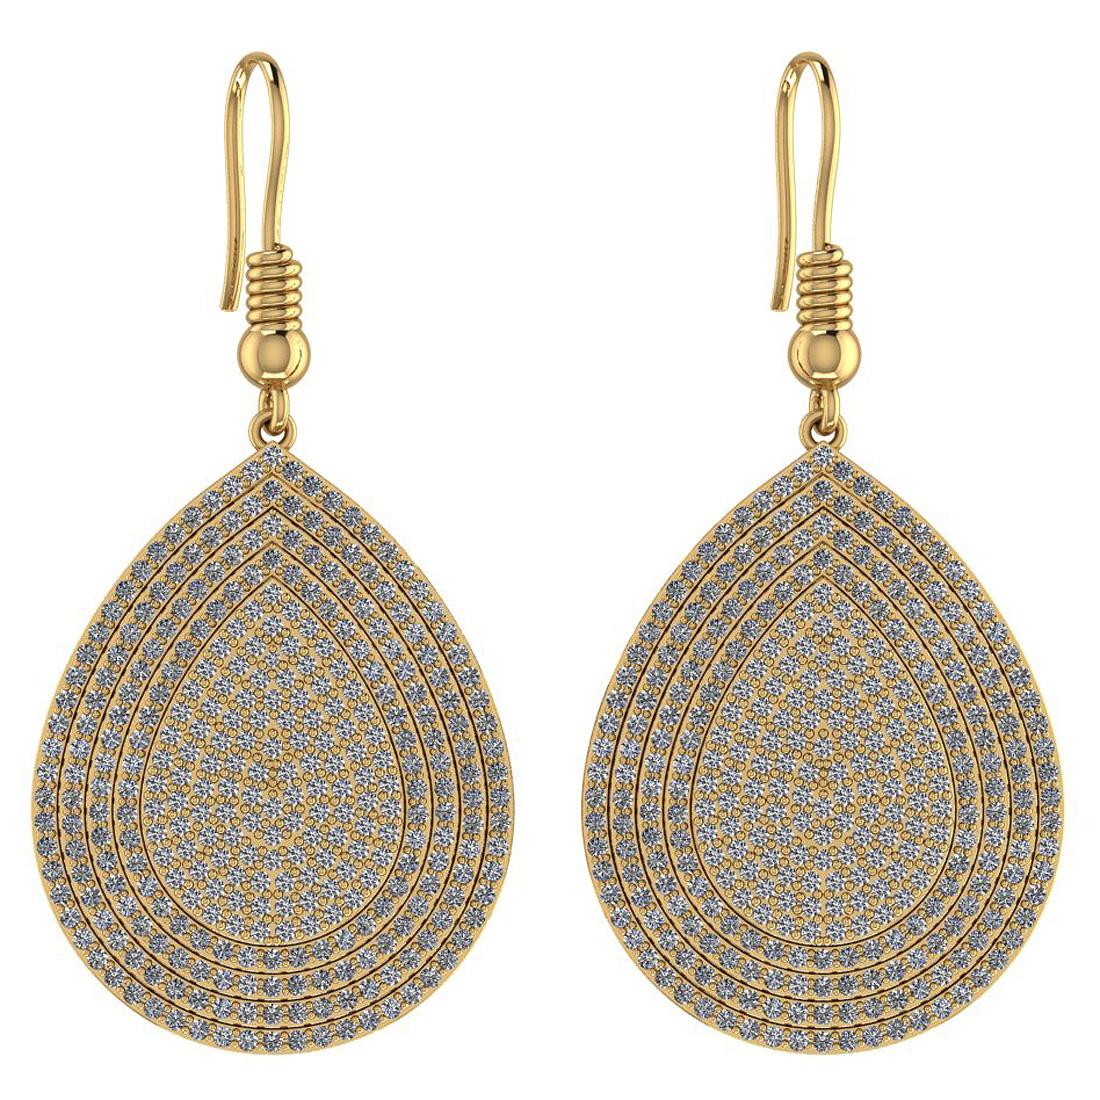 1.62 Ctw VS/SI1 Diamond 14K Yellow Gold Earrings